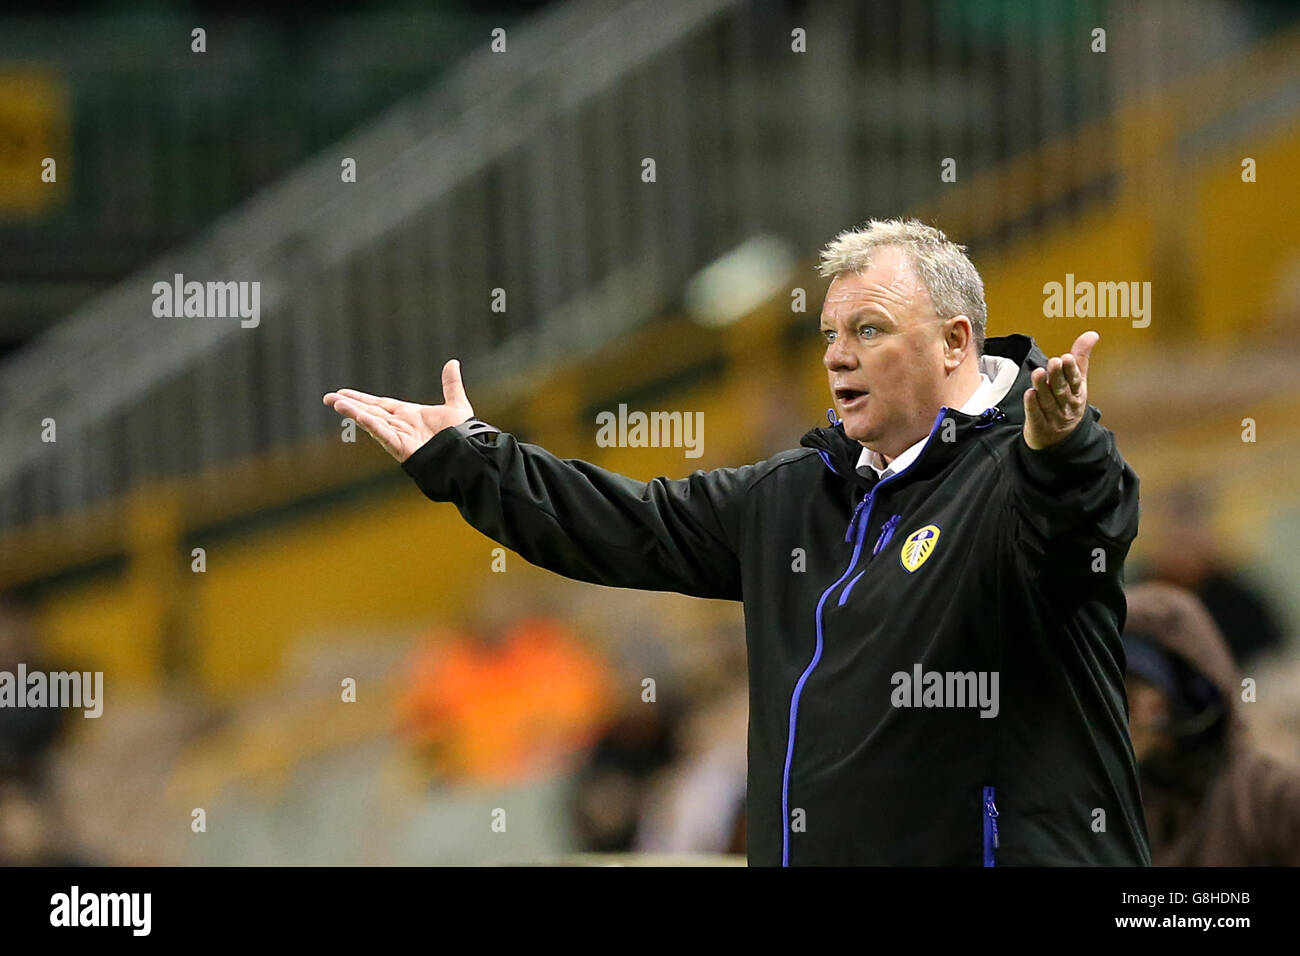 Wolverhampton Wanderers v Leeds United - Sky Bet Championship - Molineux. Leeds United manager Steve Evans gestures on the touchline Stock Photo